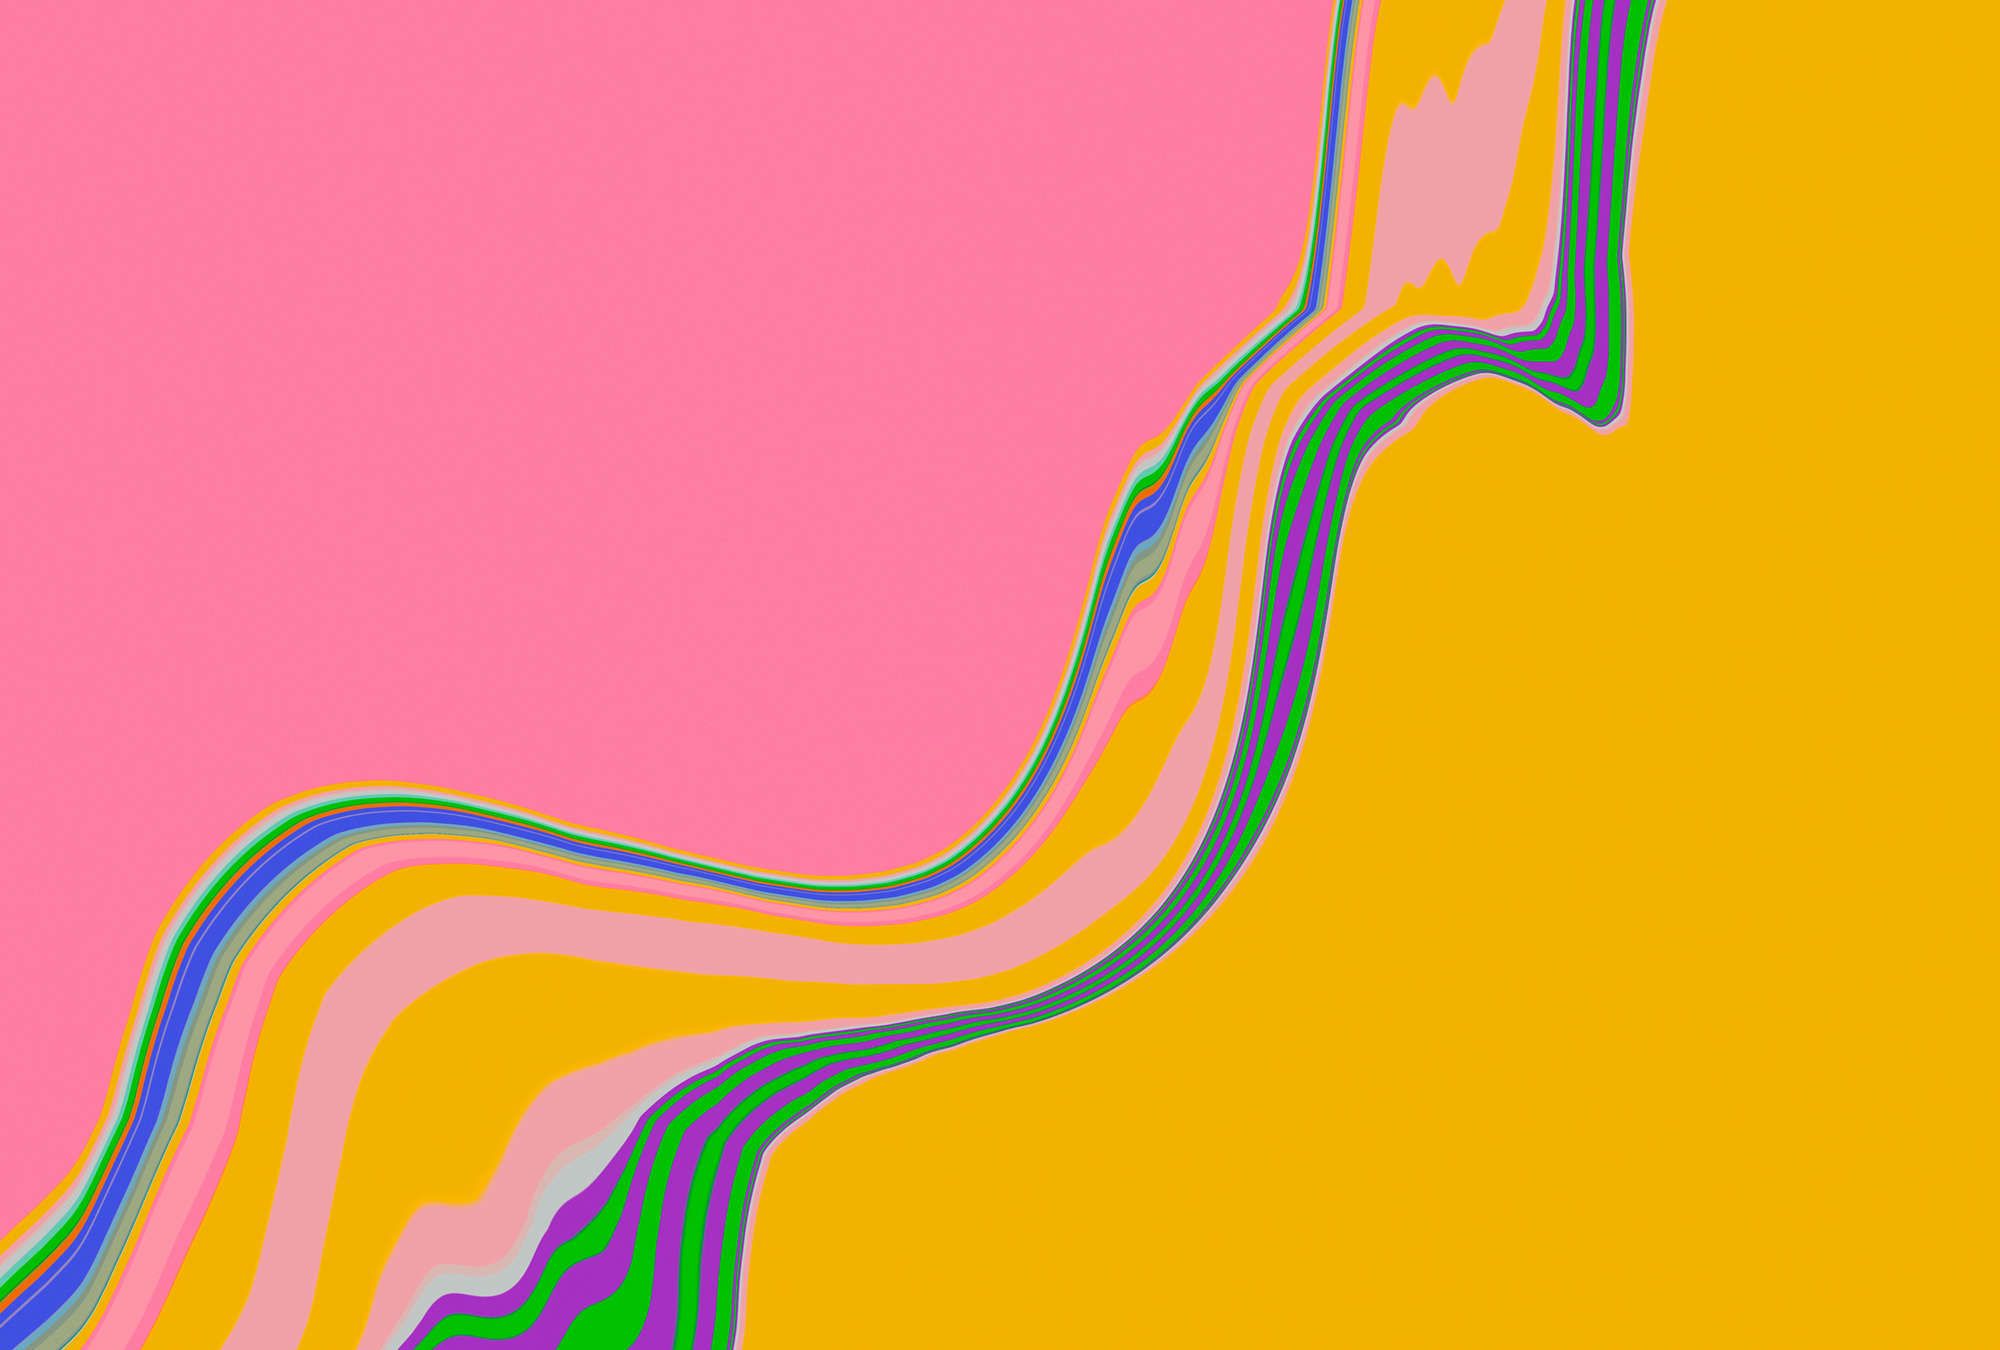             Fotomural »nexus« - Diseño abstracto de olas - Rosa, Naranja | Material no tejido de textura ligera
        